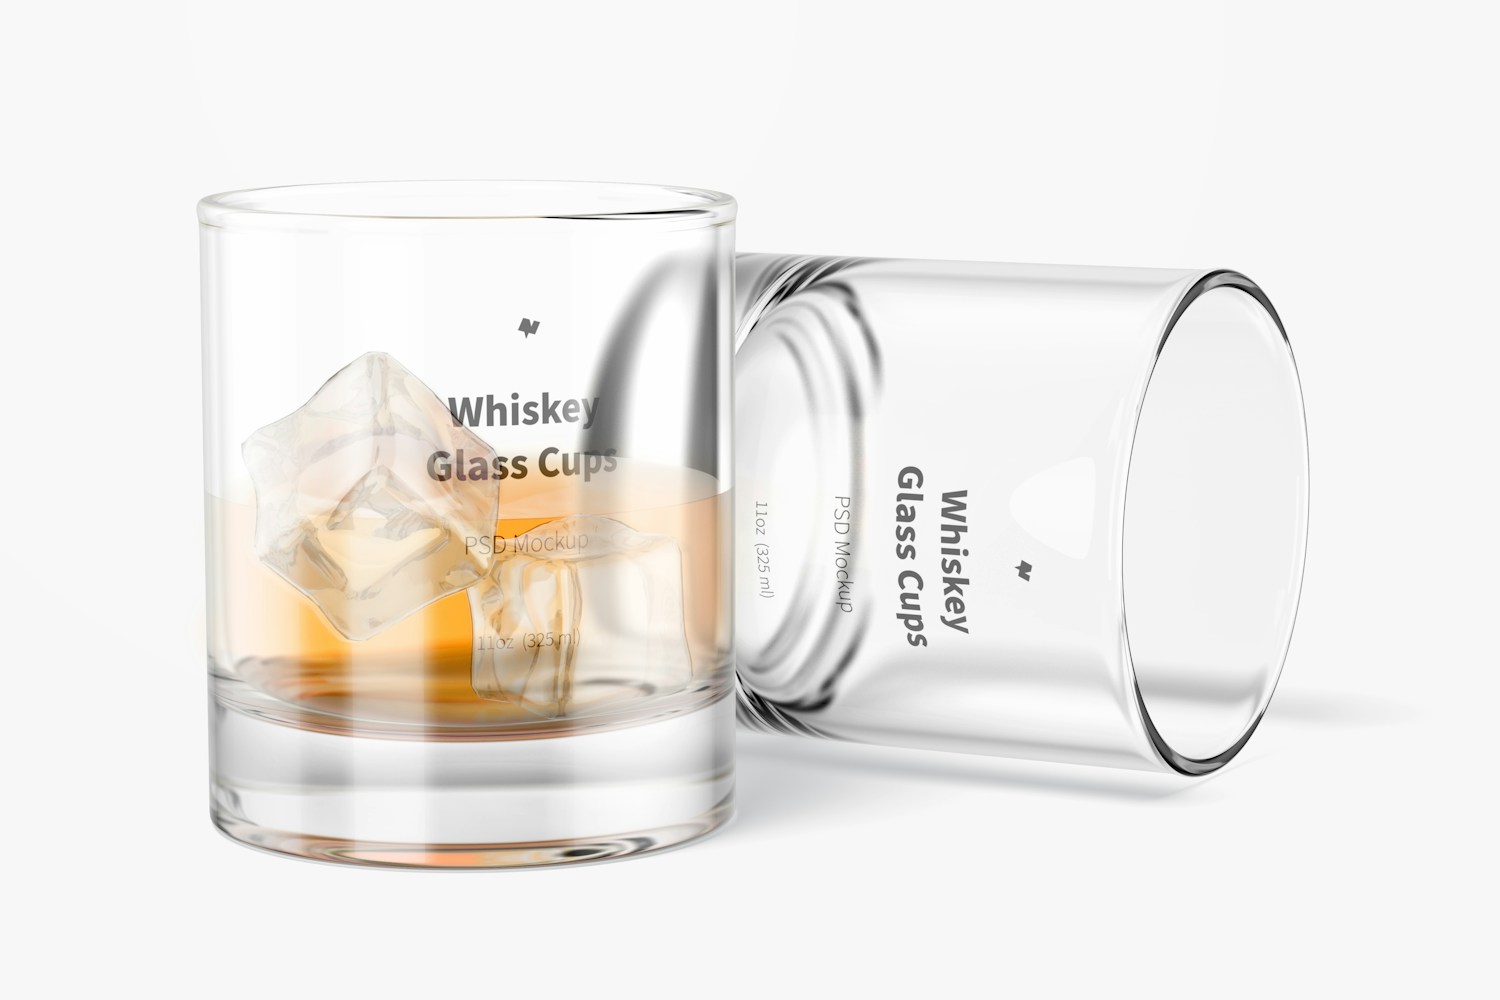 11 oz Whiskey Glass Cups Mockup